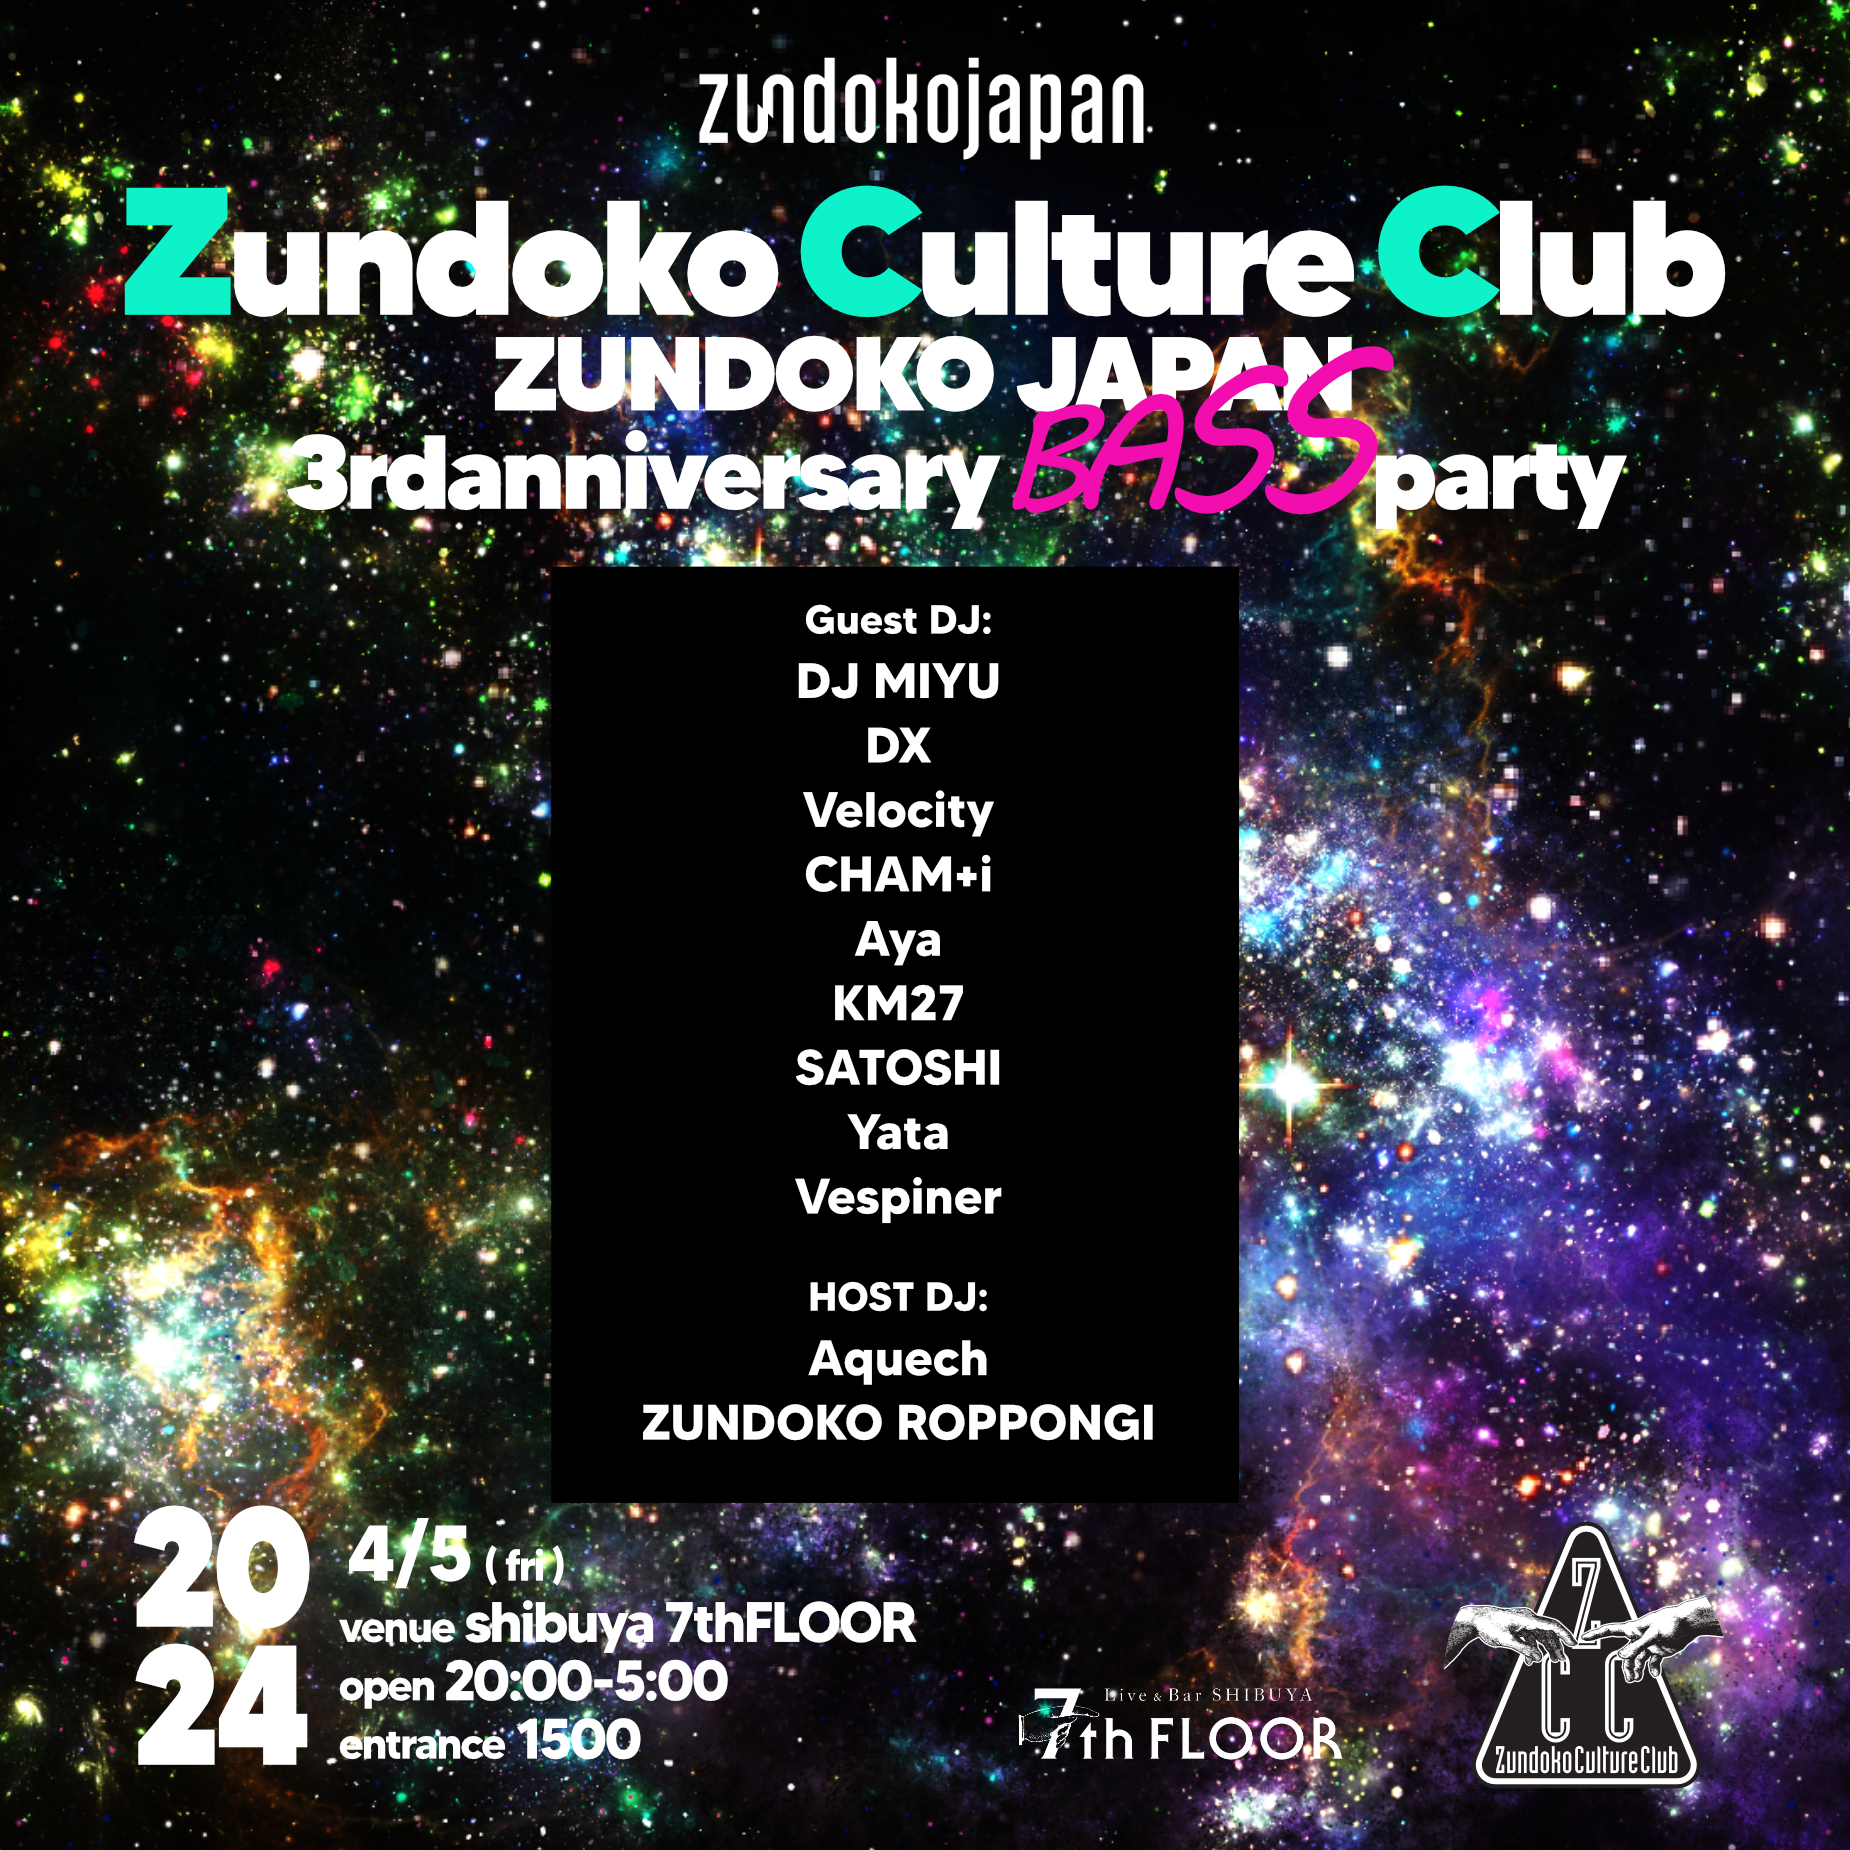 Zundoko Culture Club -ZUNDOKO JAPAN 3rdanniversary BASS party-